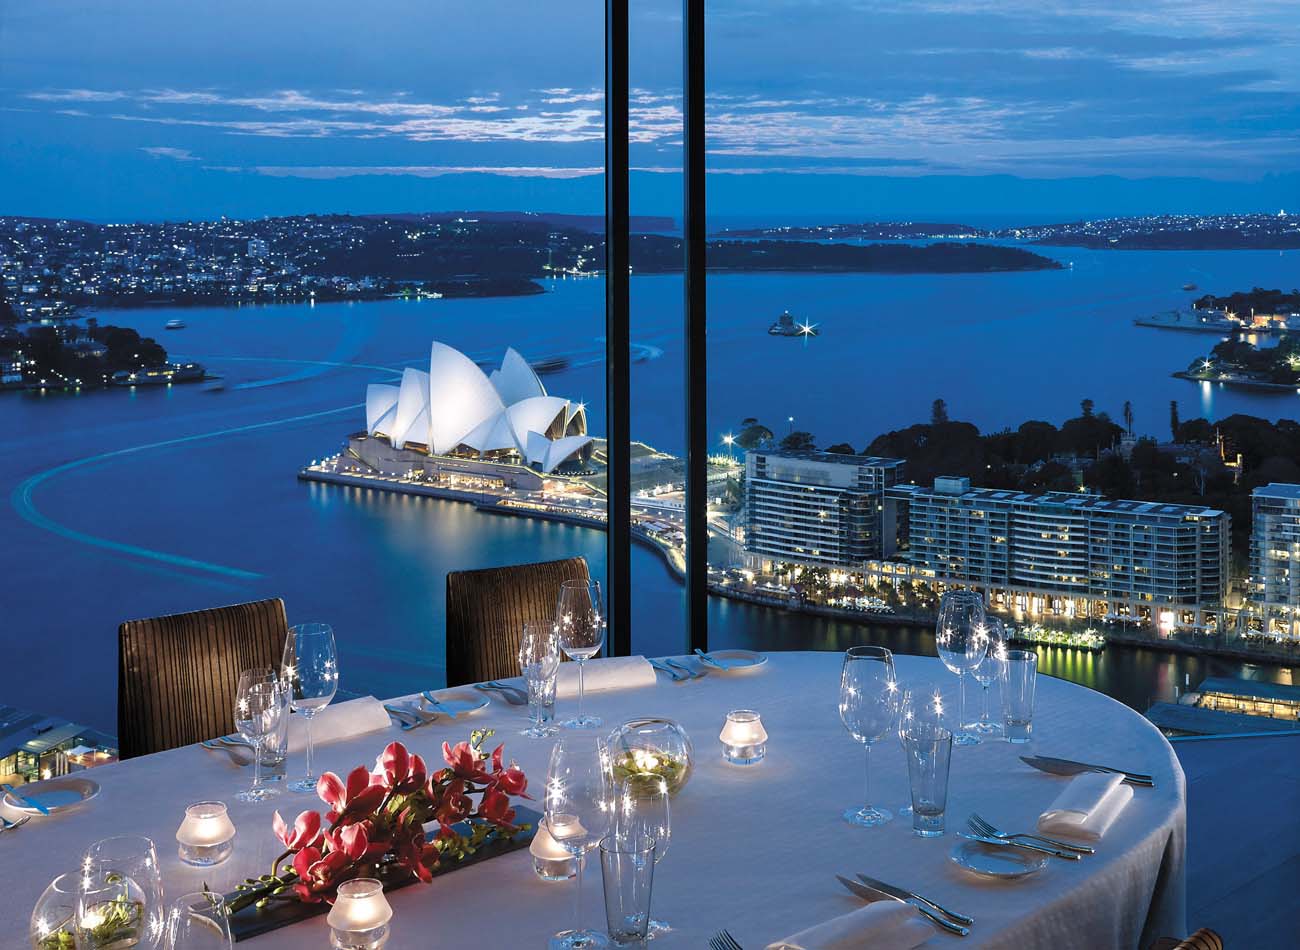 http://www.shangri-la.com/uploadedImages/Shangri-la_Hotels/Shangri-La_Hotel,_Sydney/SLSN-Bg-Altitude-Table.jpg